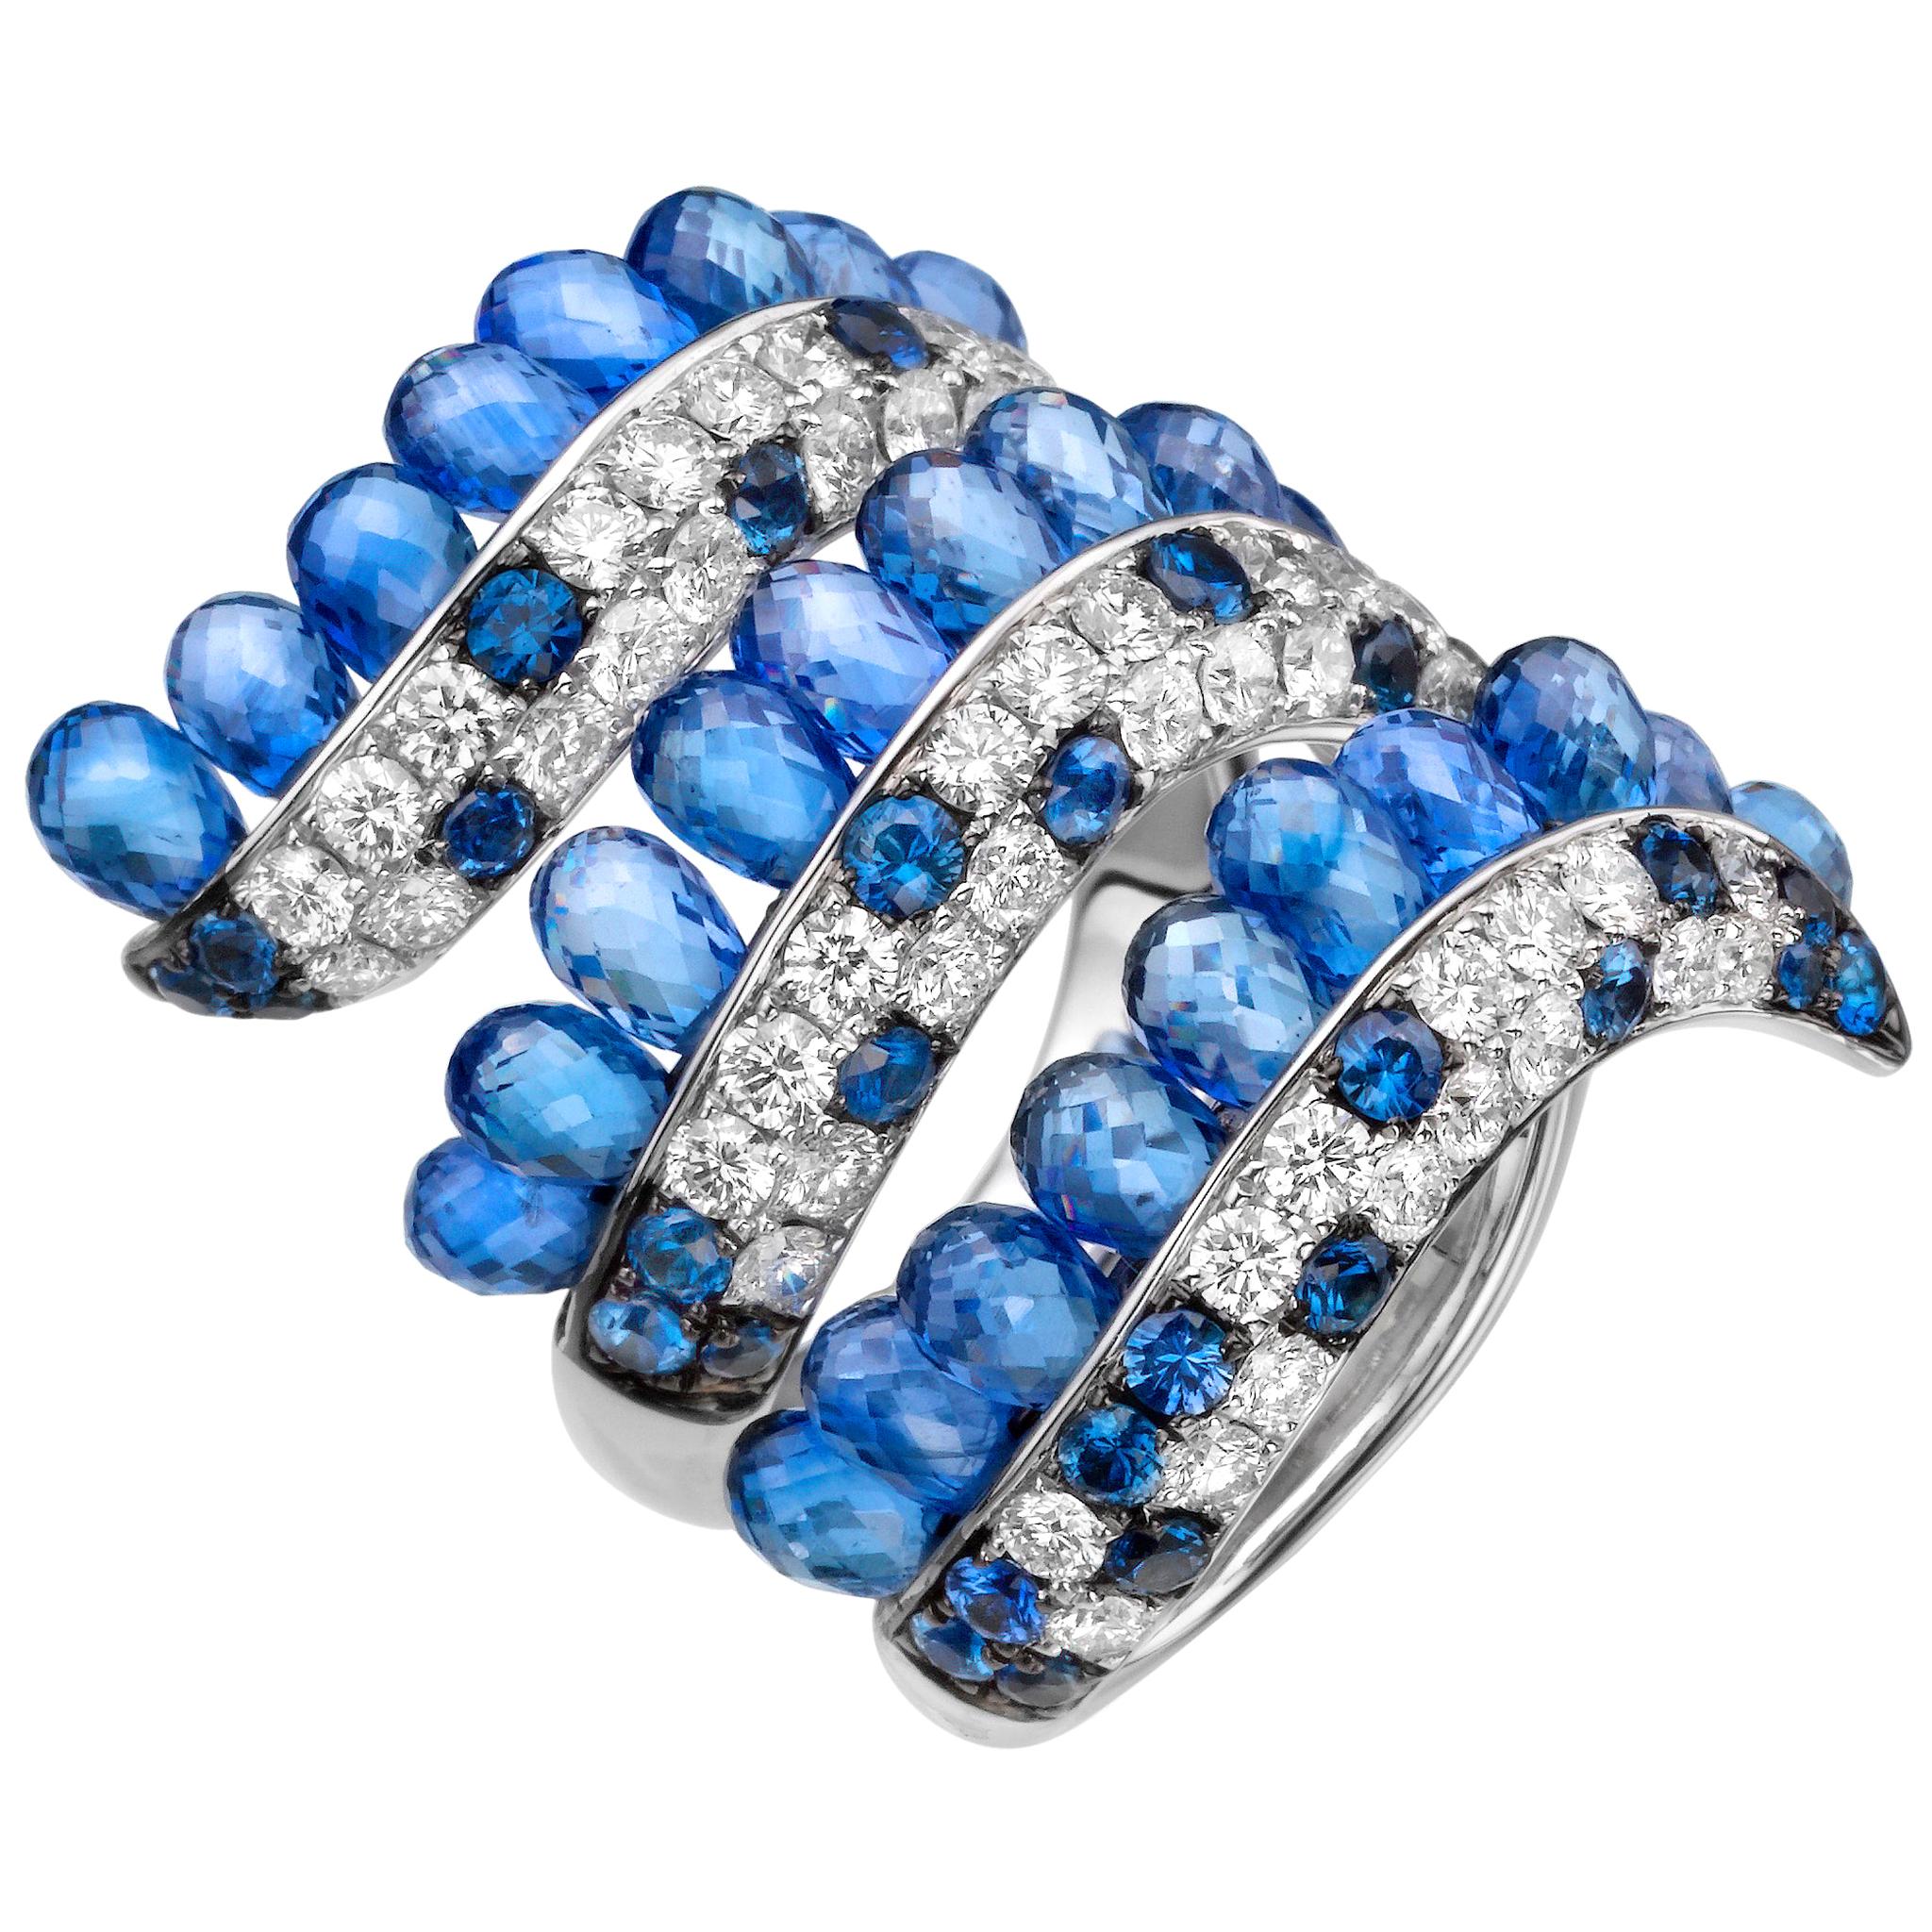 19.72 Carat Blue Sapphire Briolette Diamond 18 Karat White Gold Diamond Ring